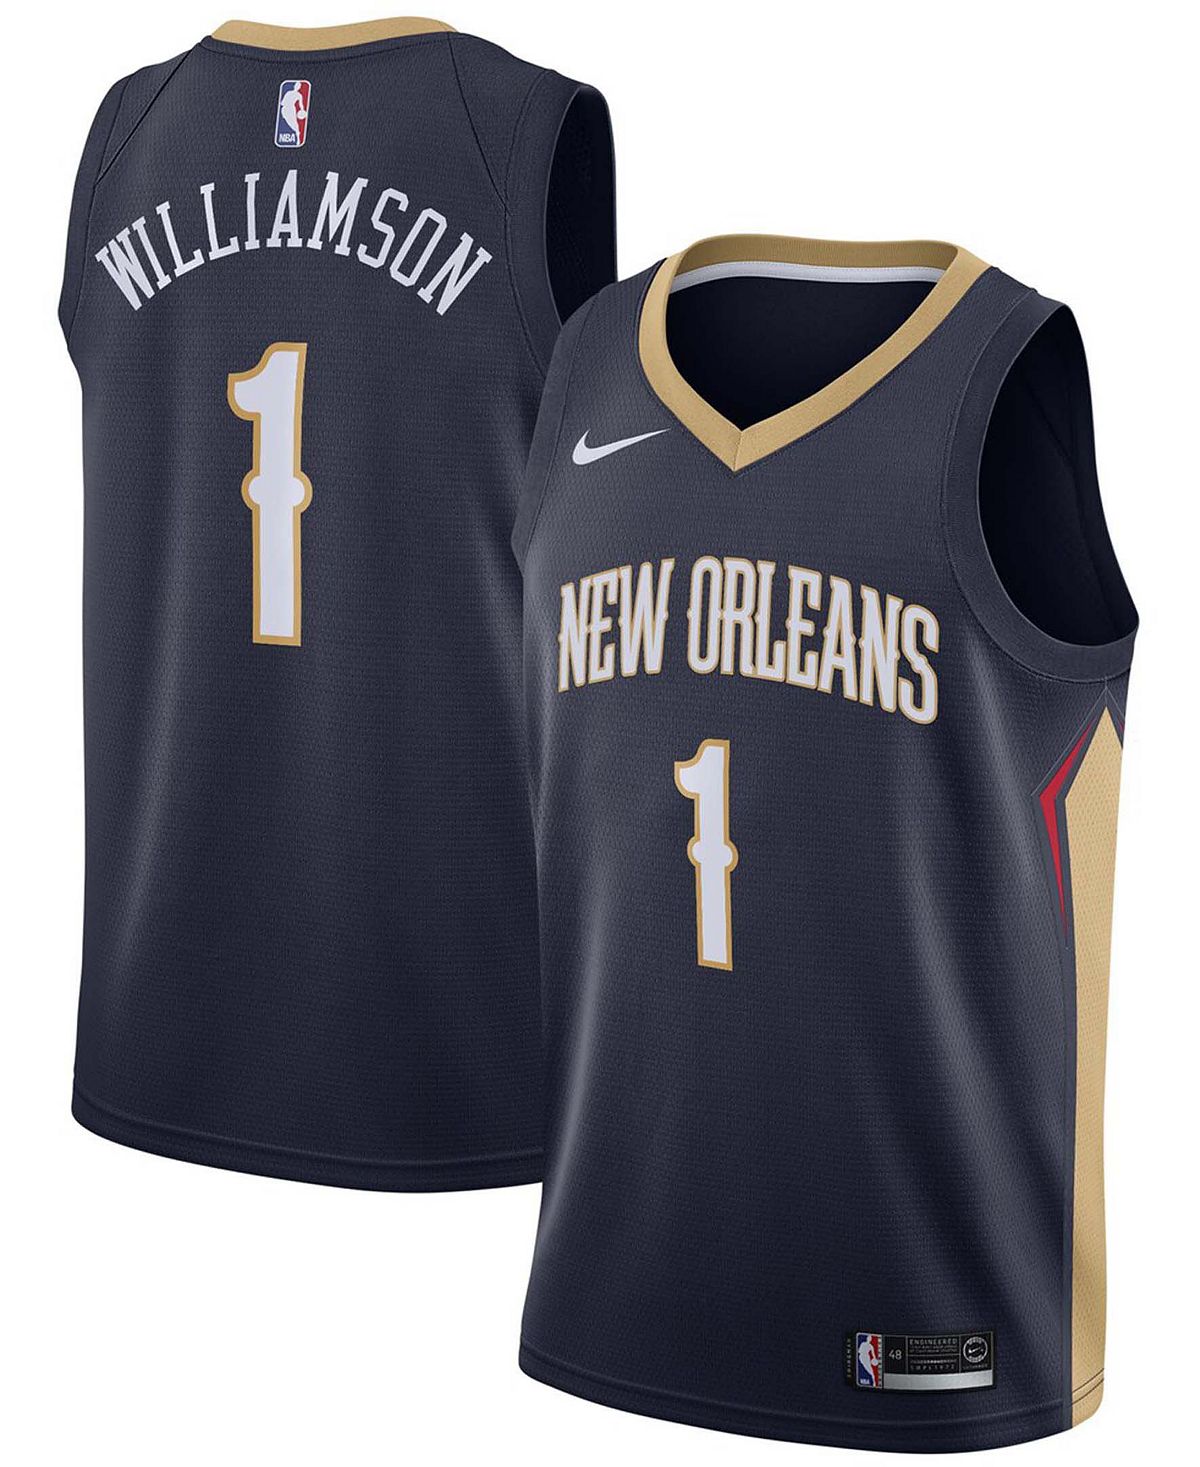 Мужская футболка zion williamson navy new orleans pelicans 2019 nba draft first round swingman jersey — icon edition Nike, синий